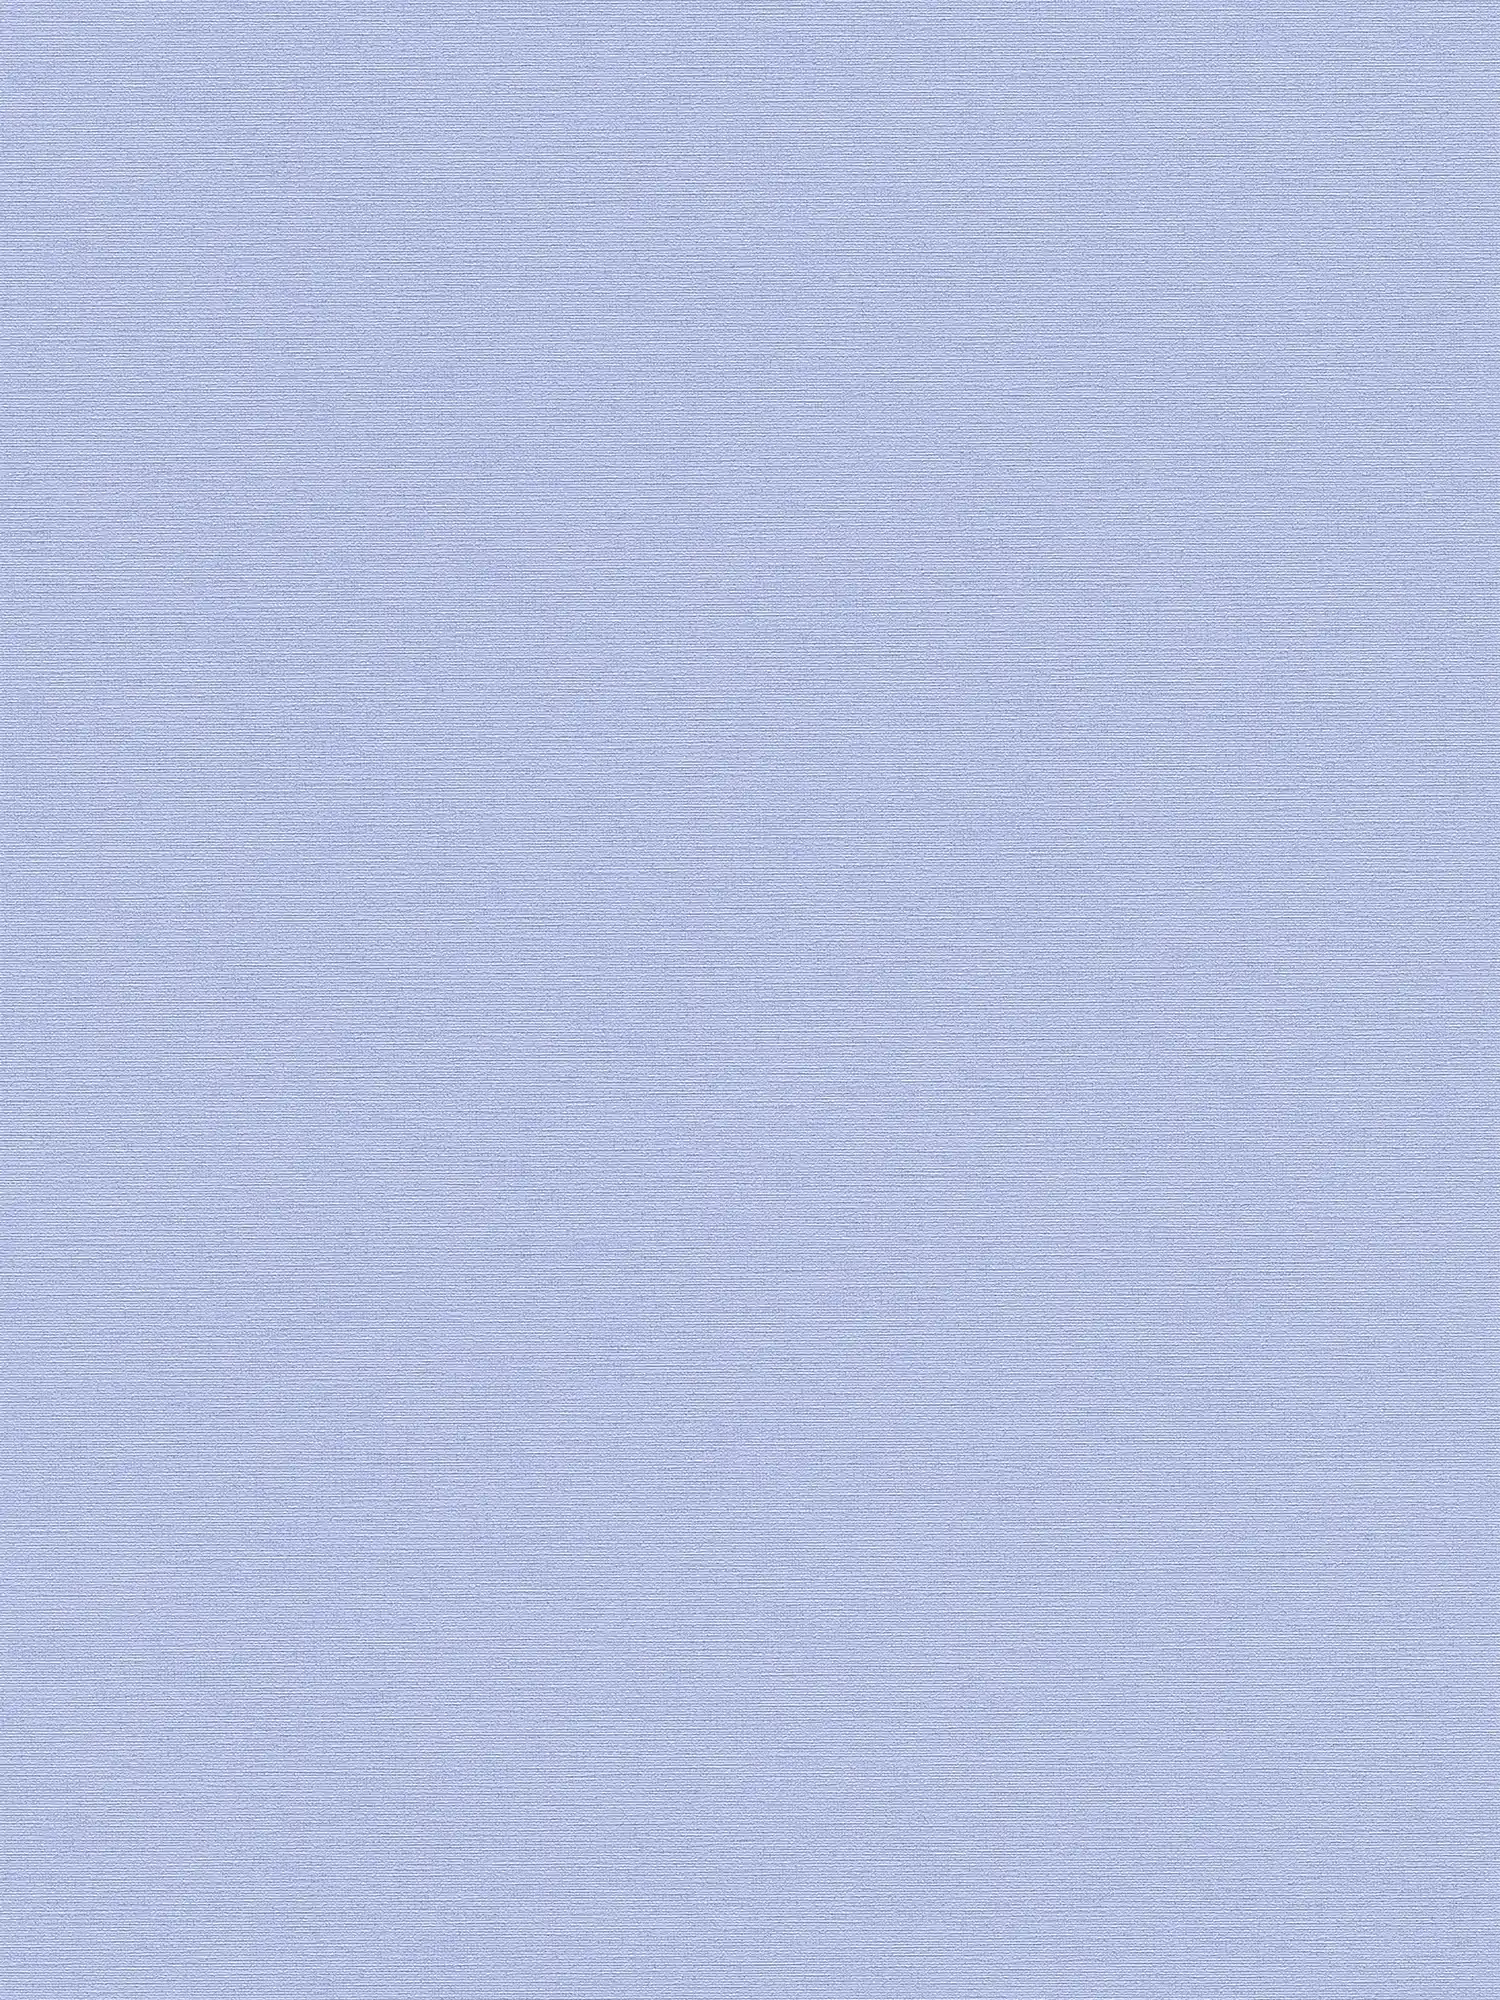 Papier peint intissé uni aspect lin - bleu
